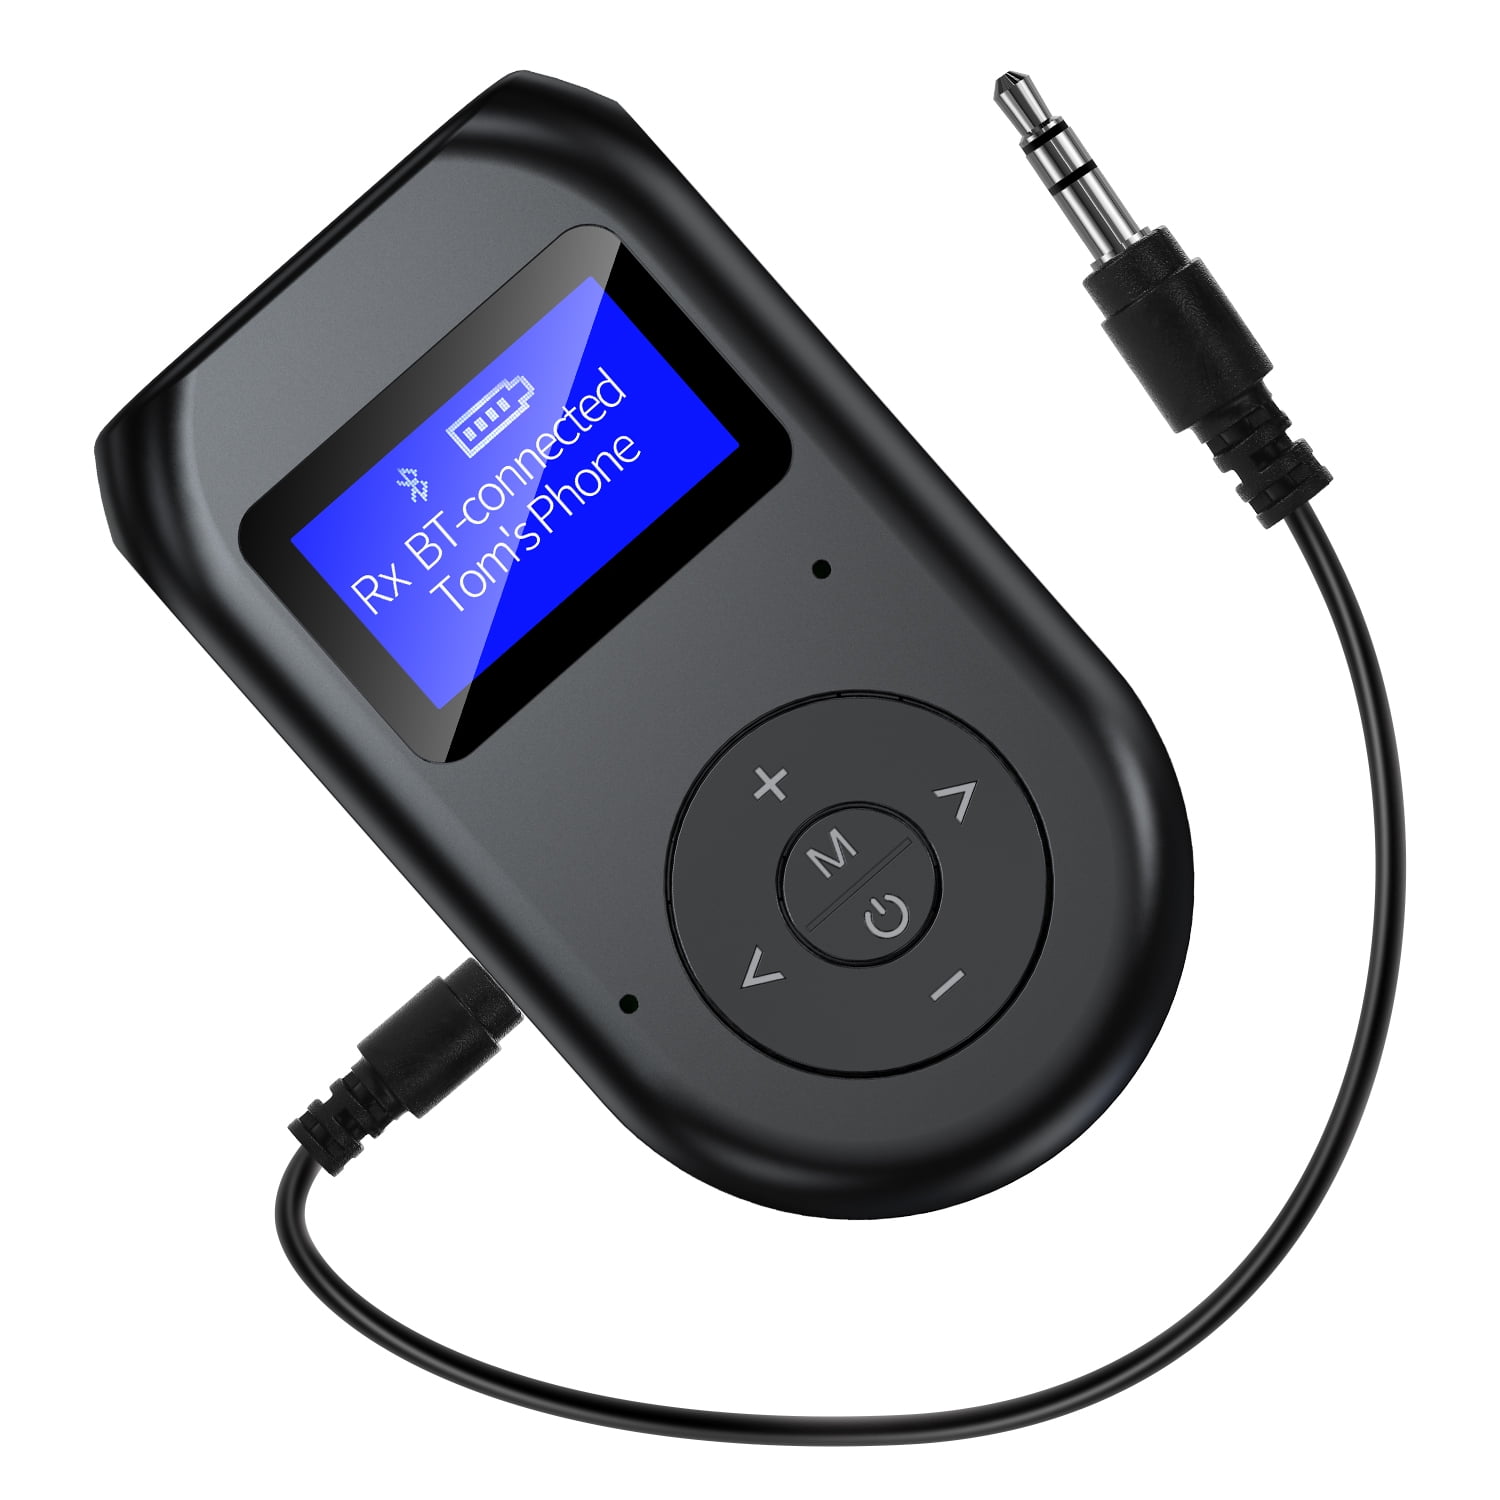 Bluetooth Transmitter Receiver Wireless Adapter for Headphone Speaker TV MP3 MP4 